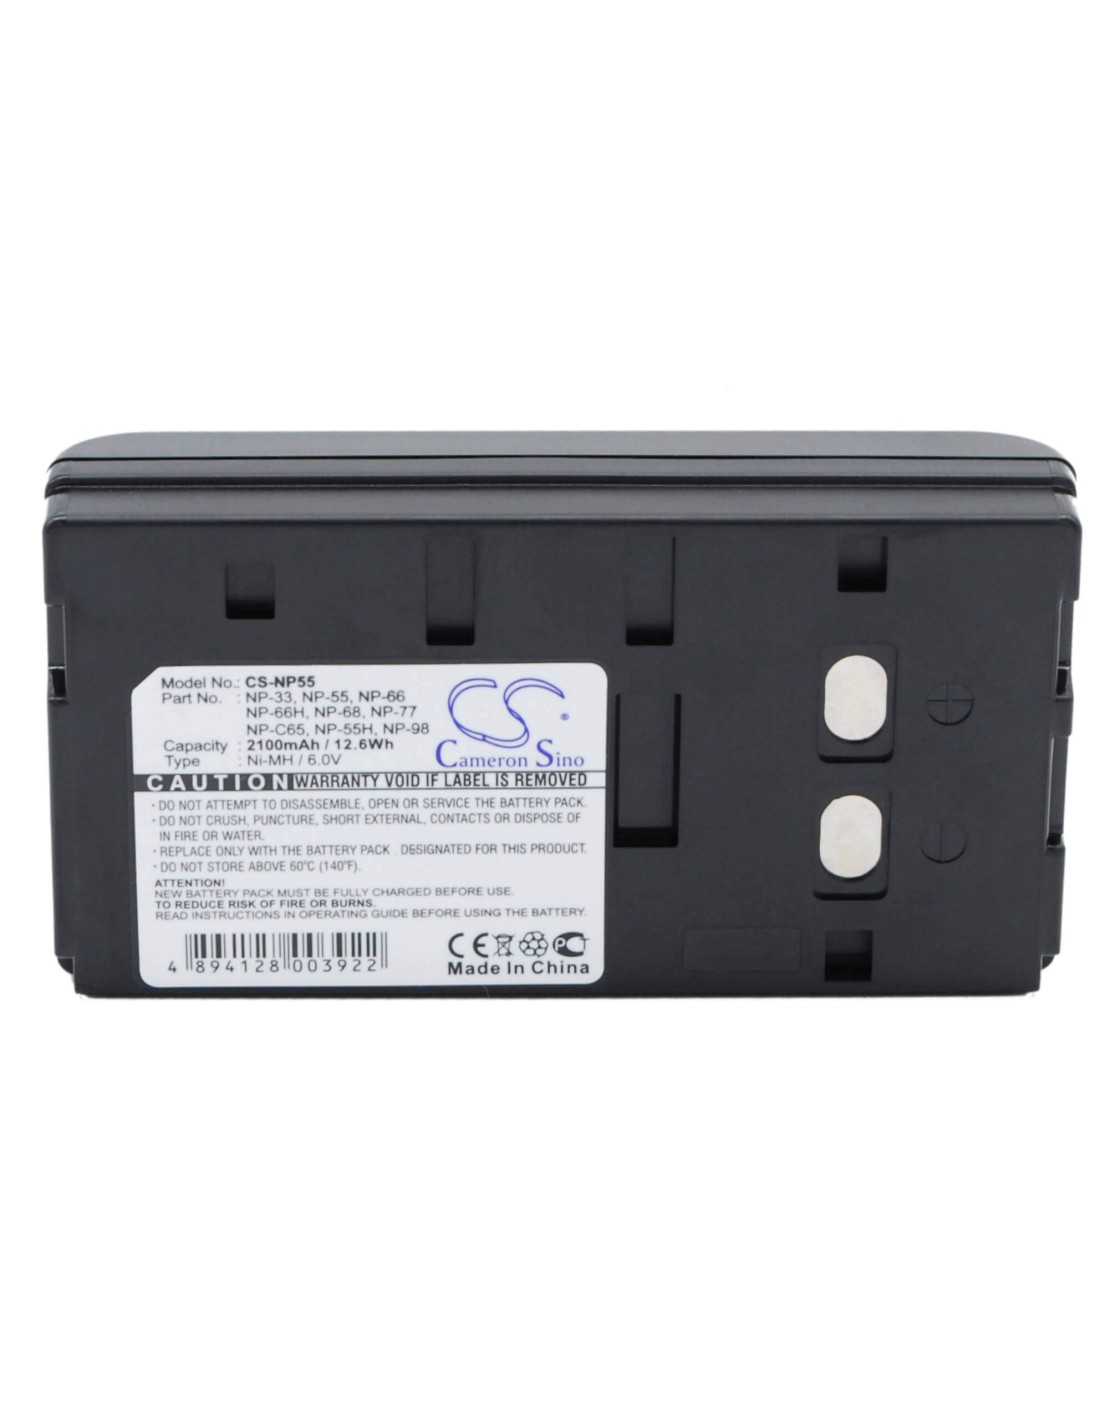 Battery for Telefunken A1200, A1601, Bt70, C1200, 6V, 2100mAh - 12.60Wh